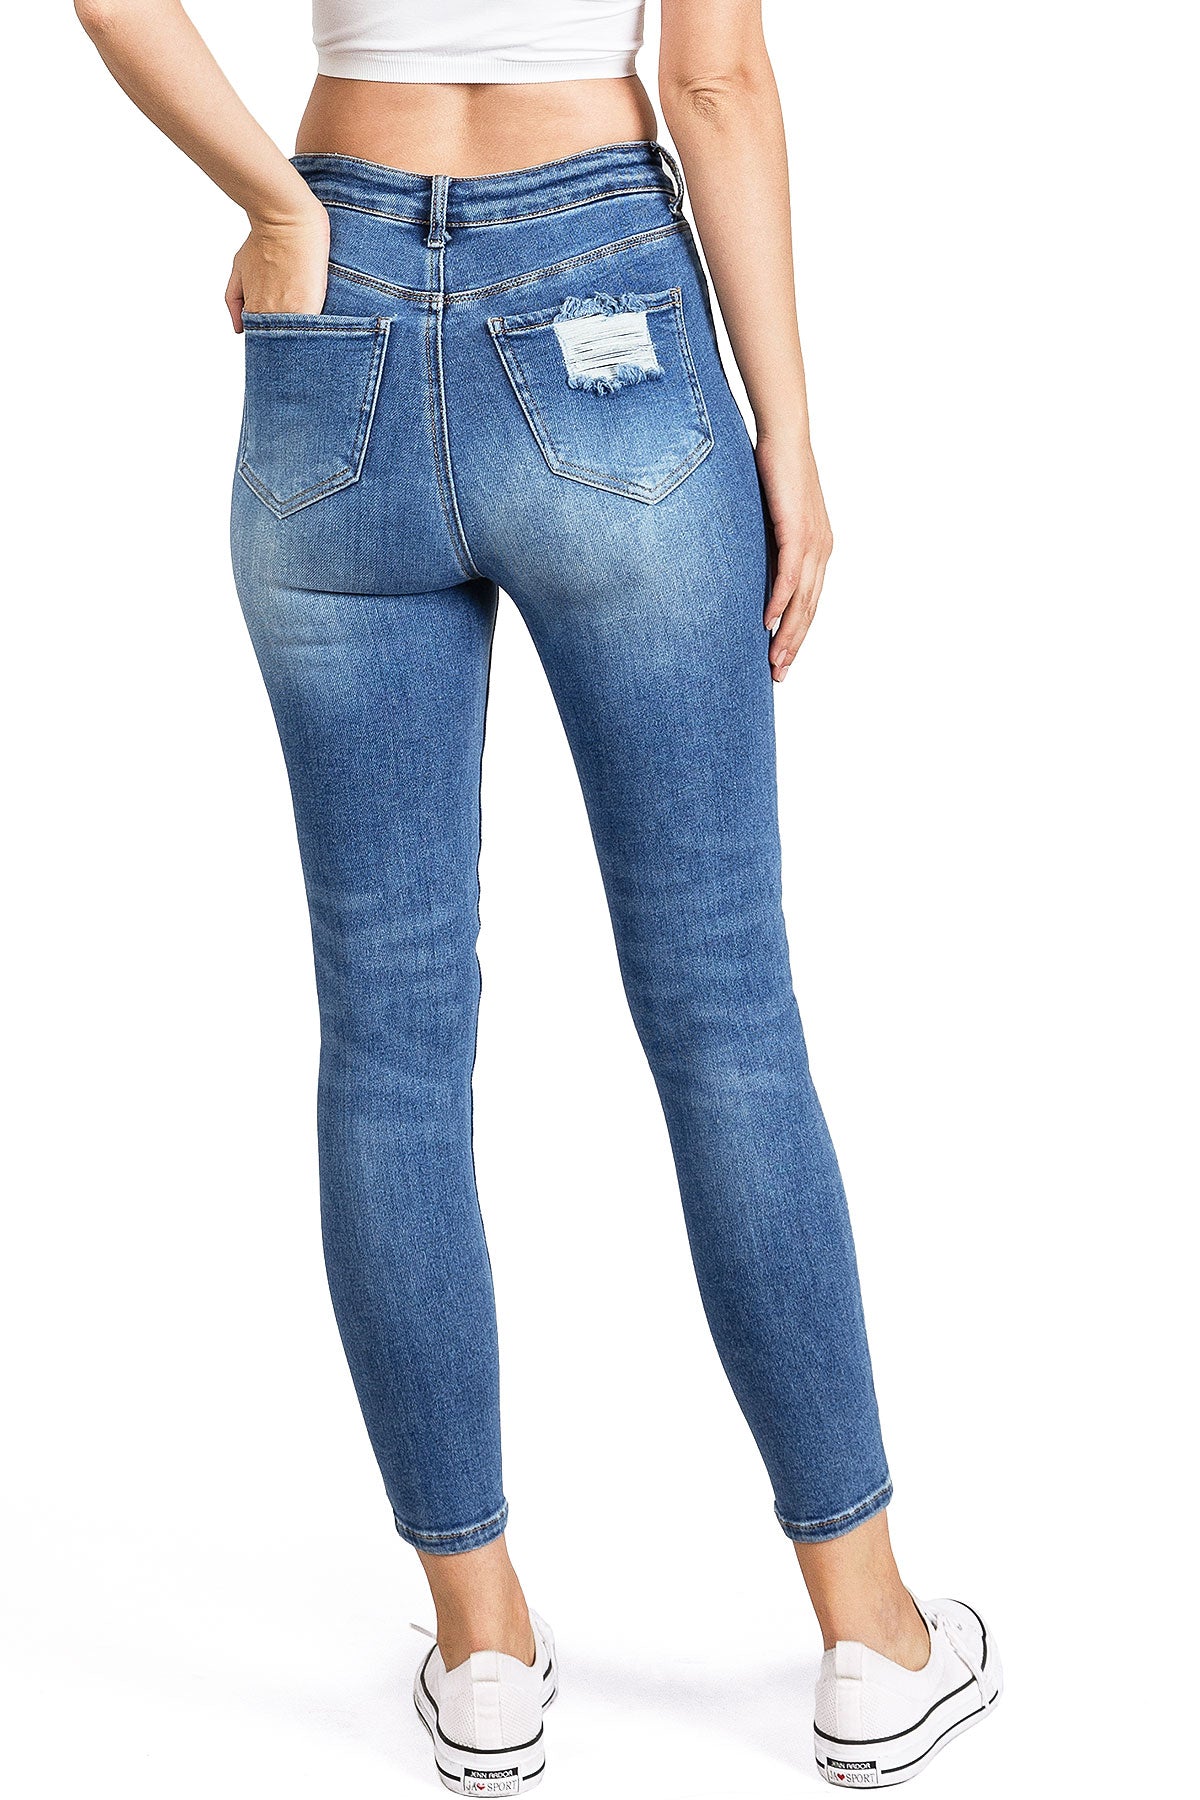 Wax Jean Women's Juniors Distressed High Rise Ankle Skinny Jeans (0, Medium Denim) - image 3 of 5